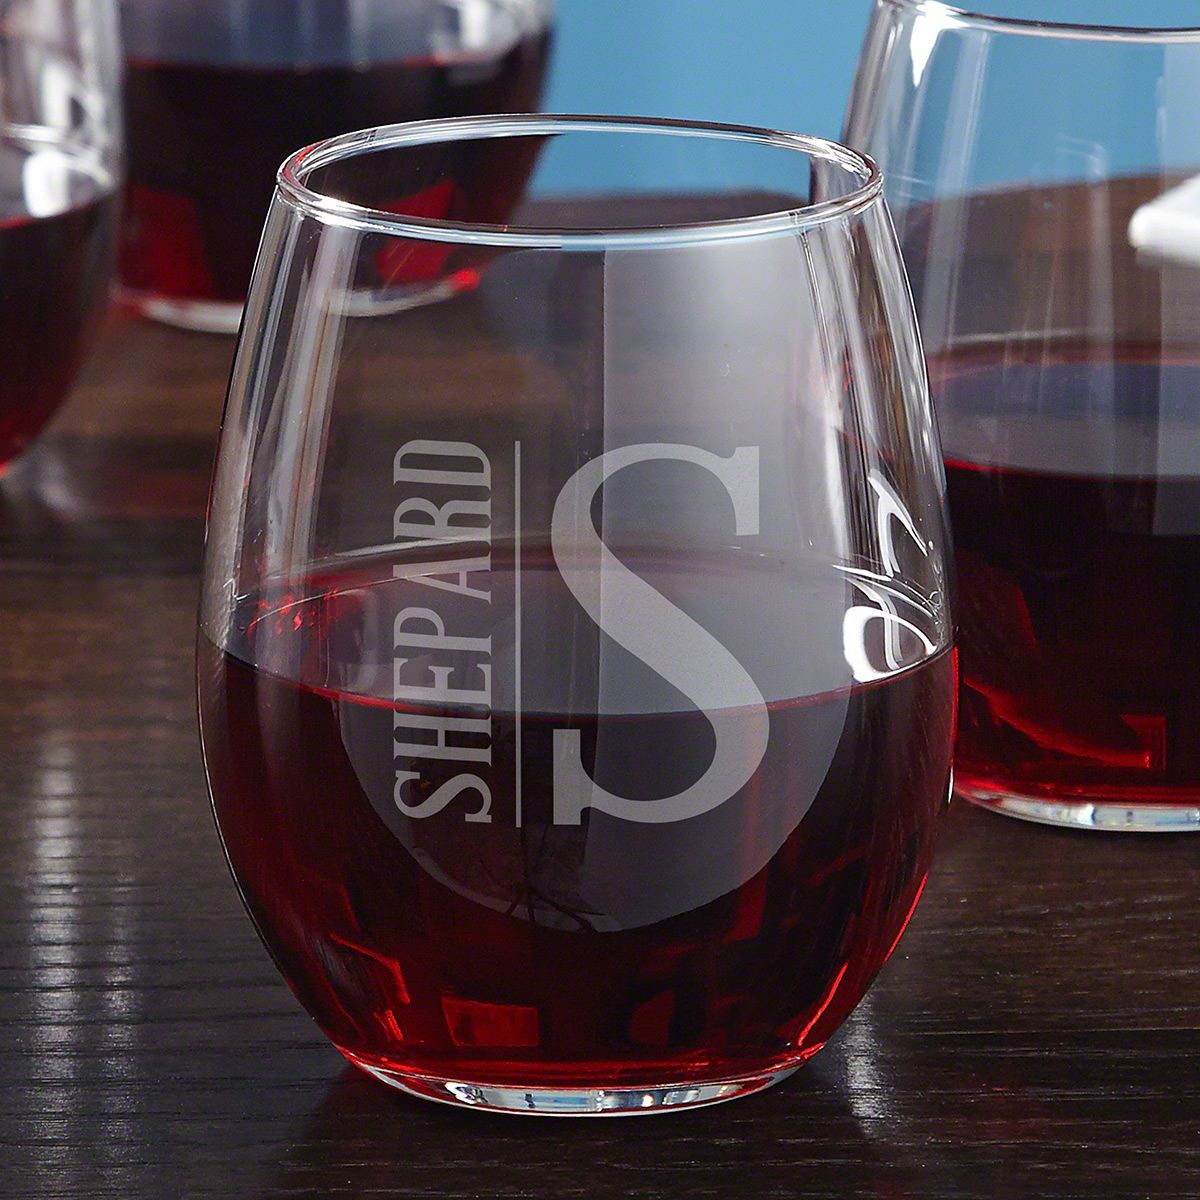 https://images.homewetbar.com/media/catalog/product/7/2/7236-elton-personalized-stemless-wine-glass-single_1.jpg?store=default&image-type=image